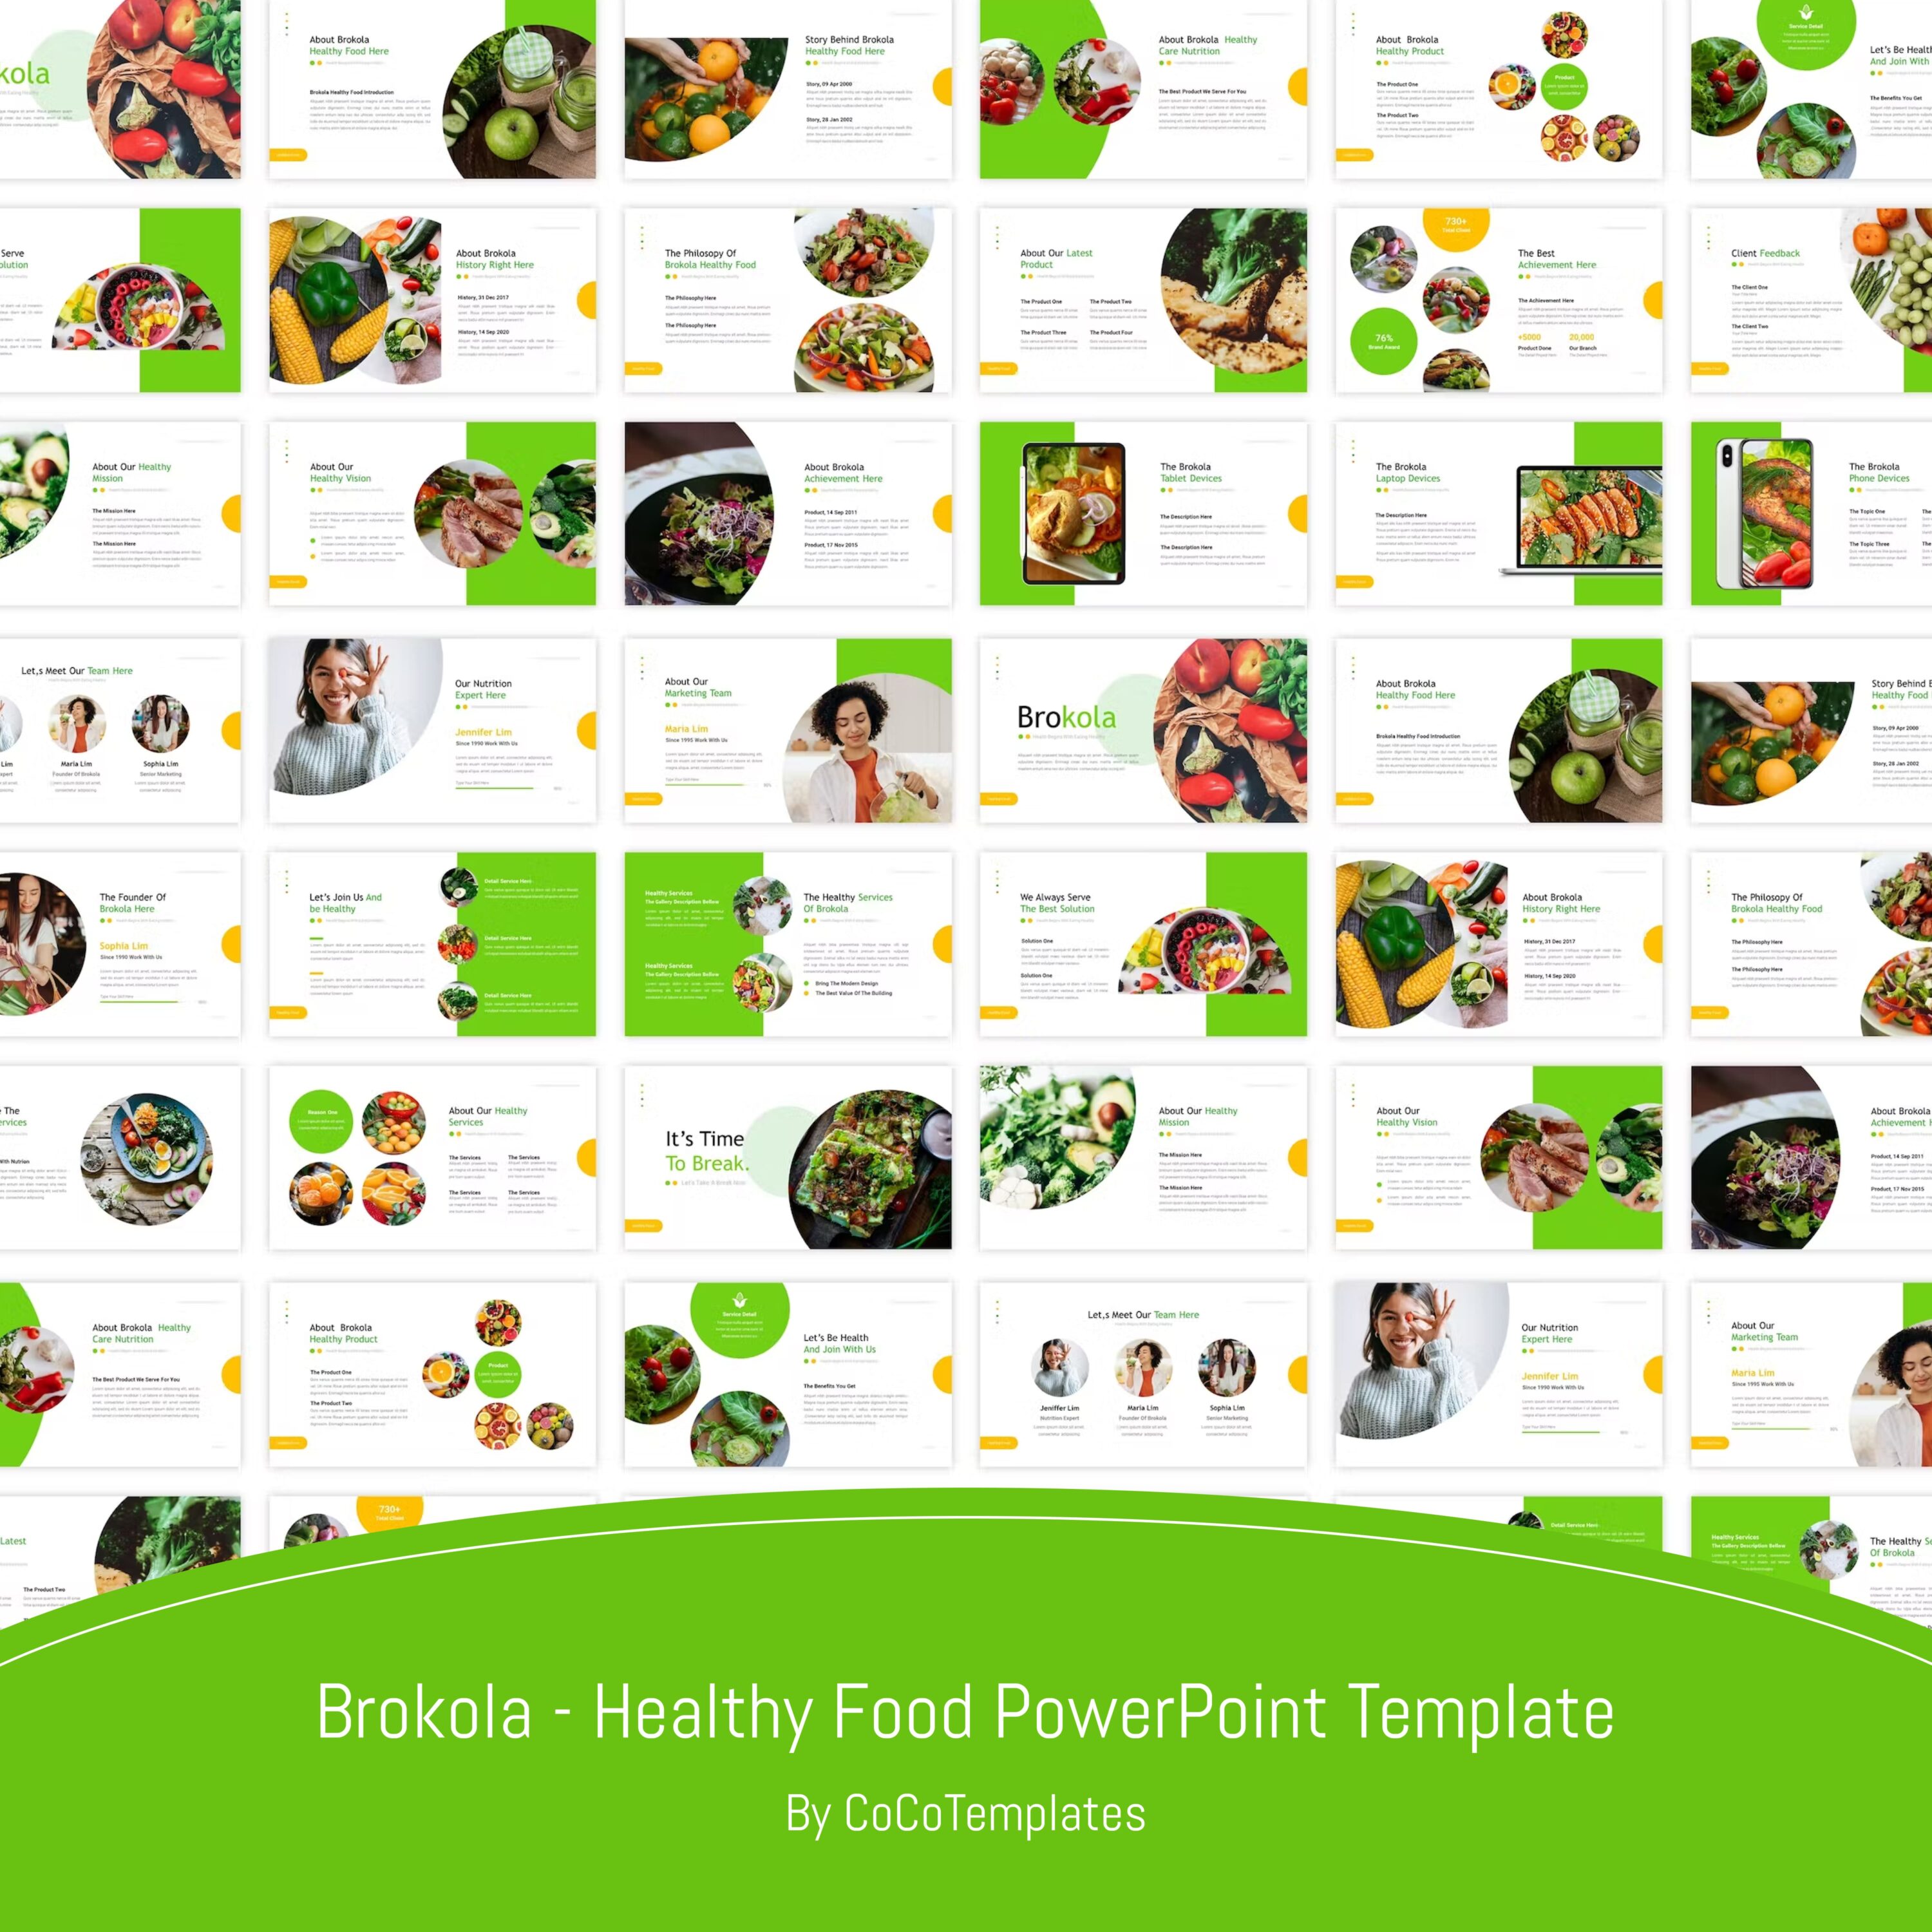 Brokola Healthy Food PowerPoint Template - main image preview.